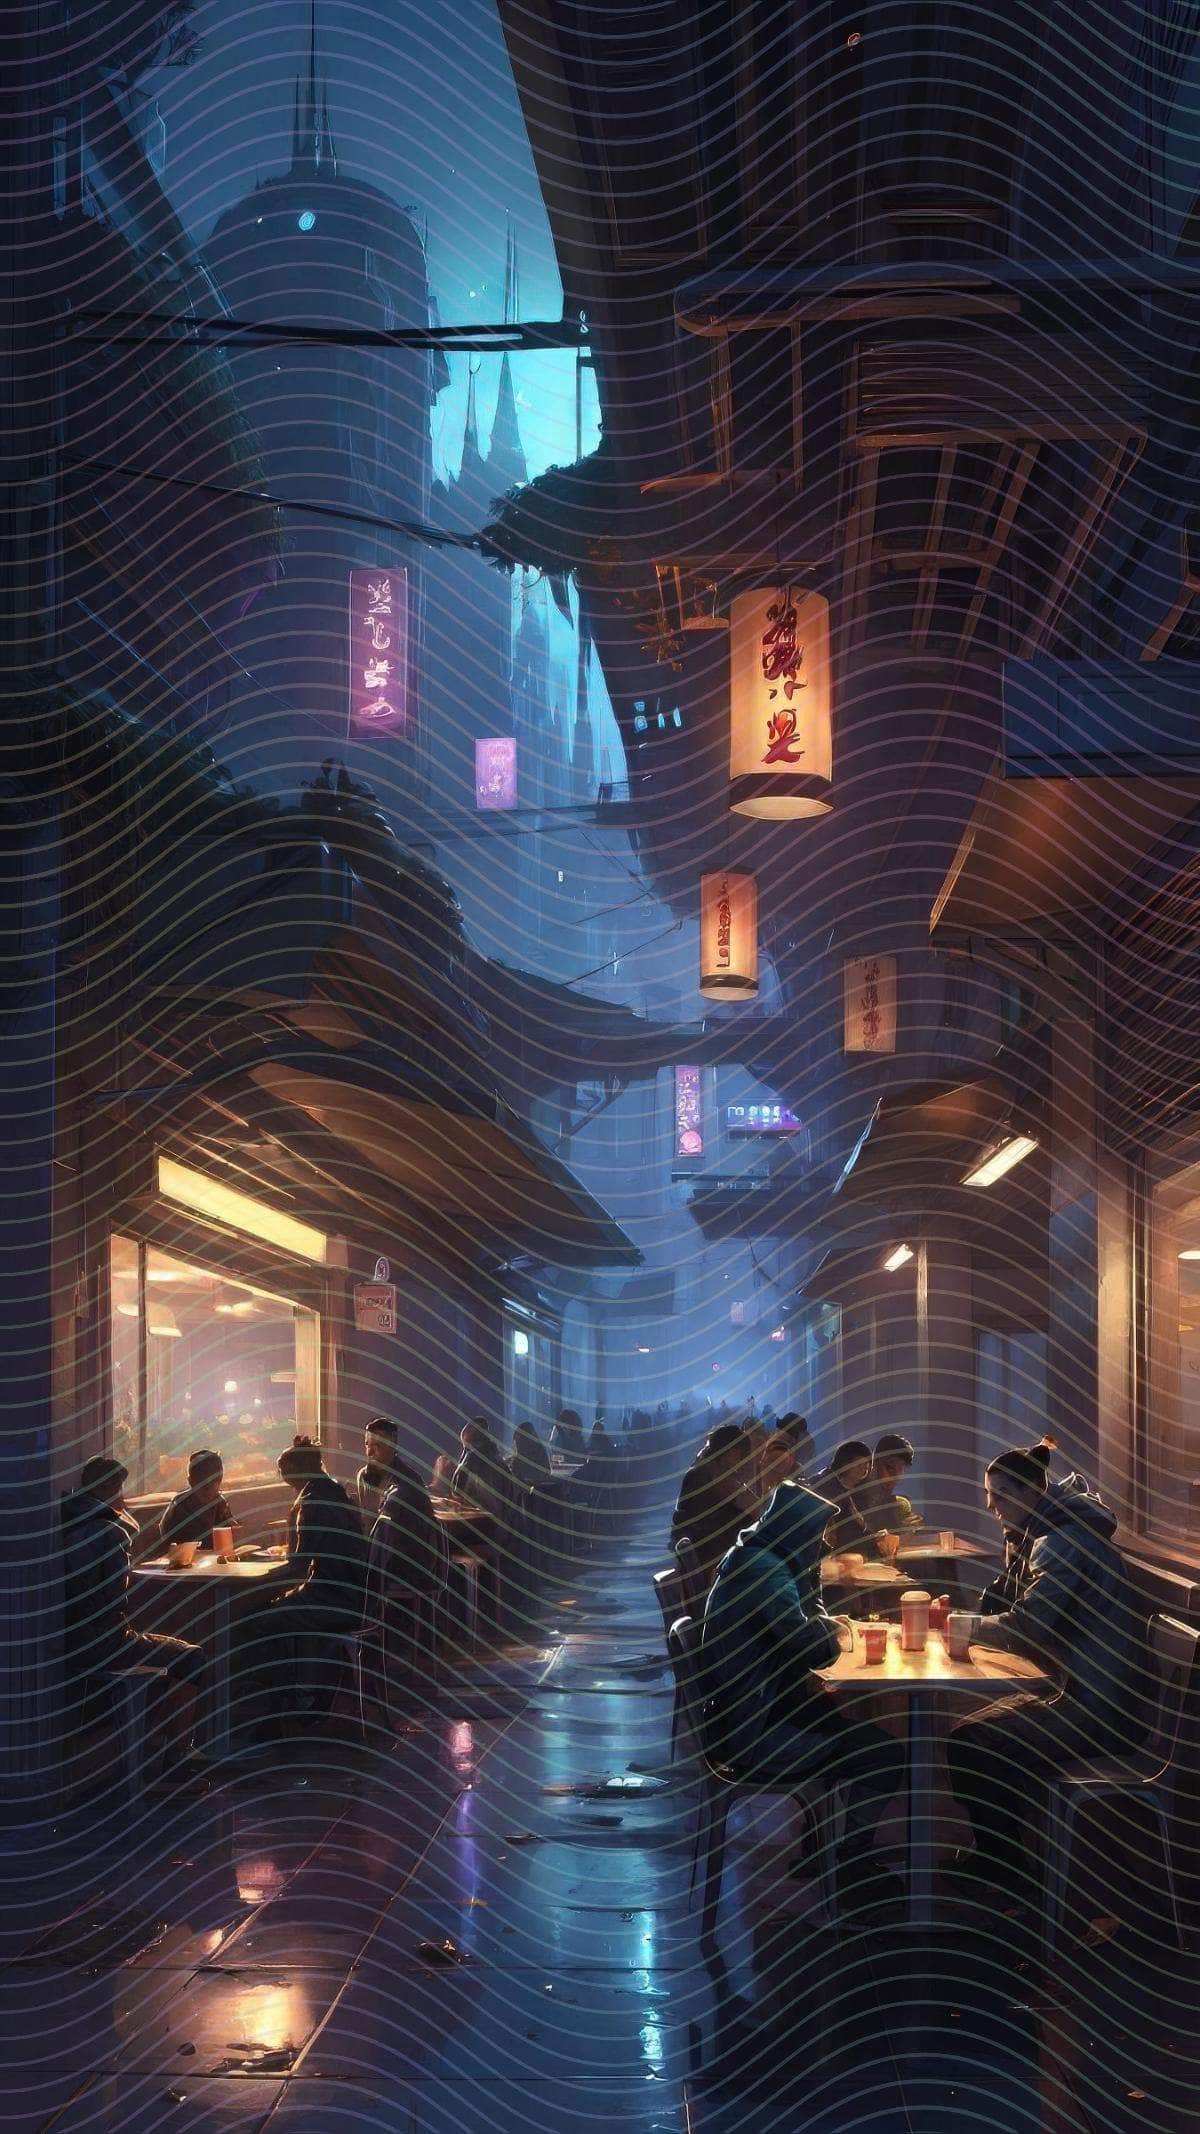 A Cafeteria in a Street Scene